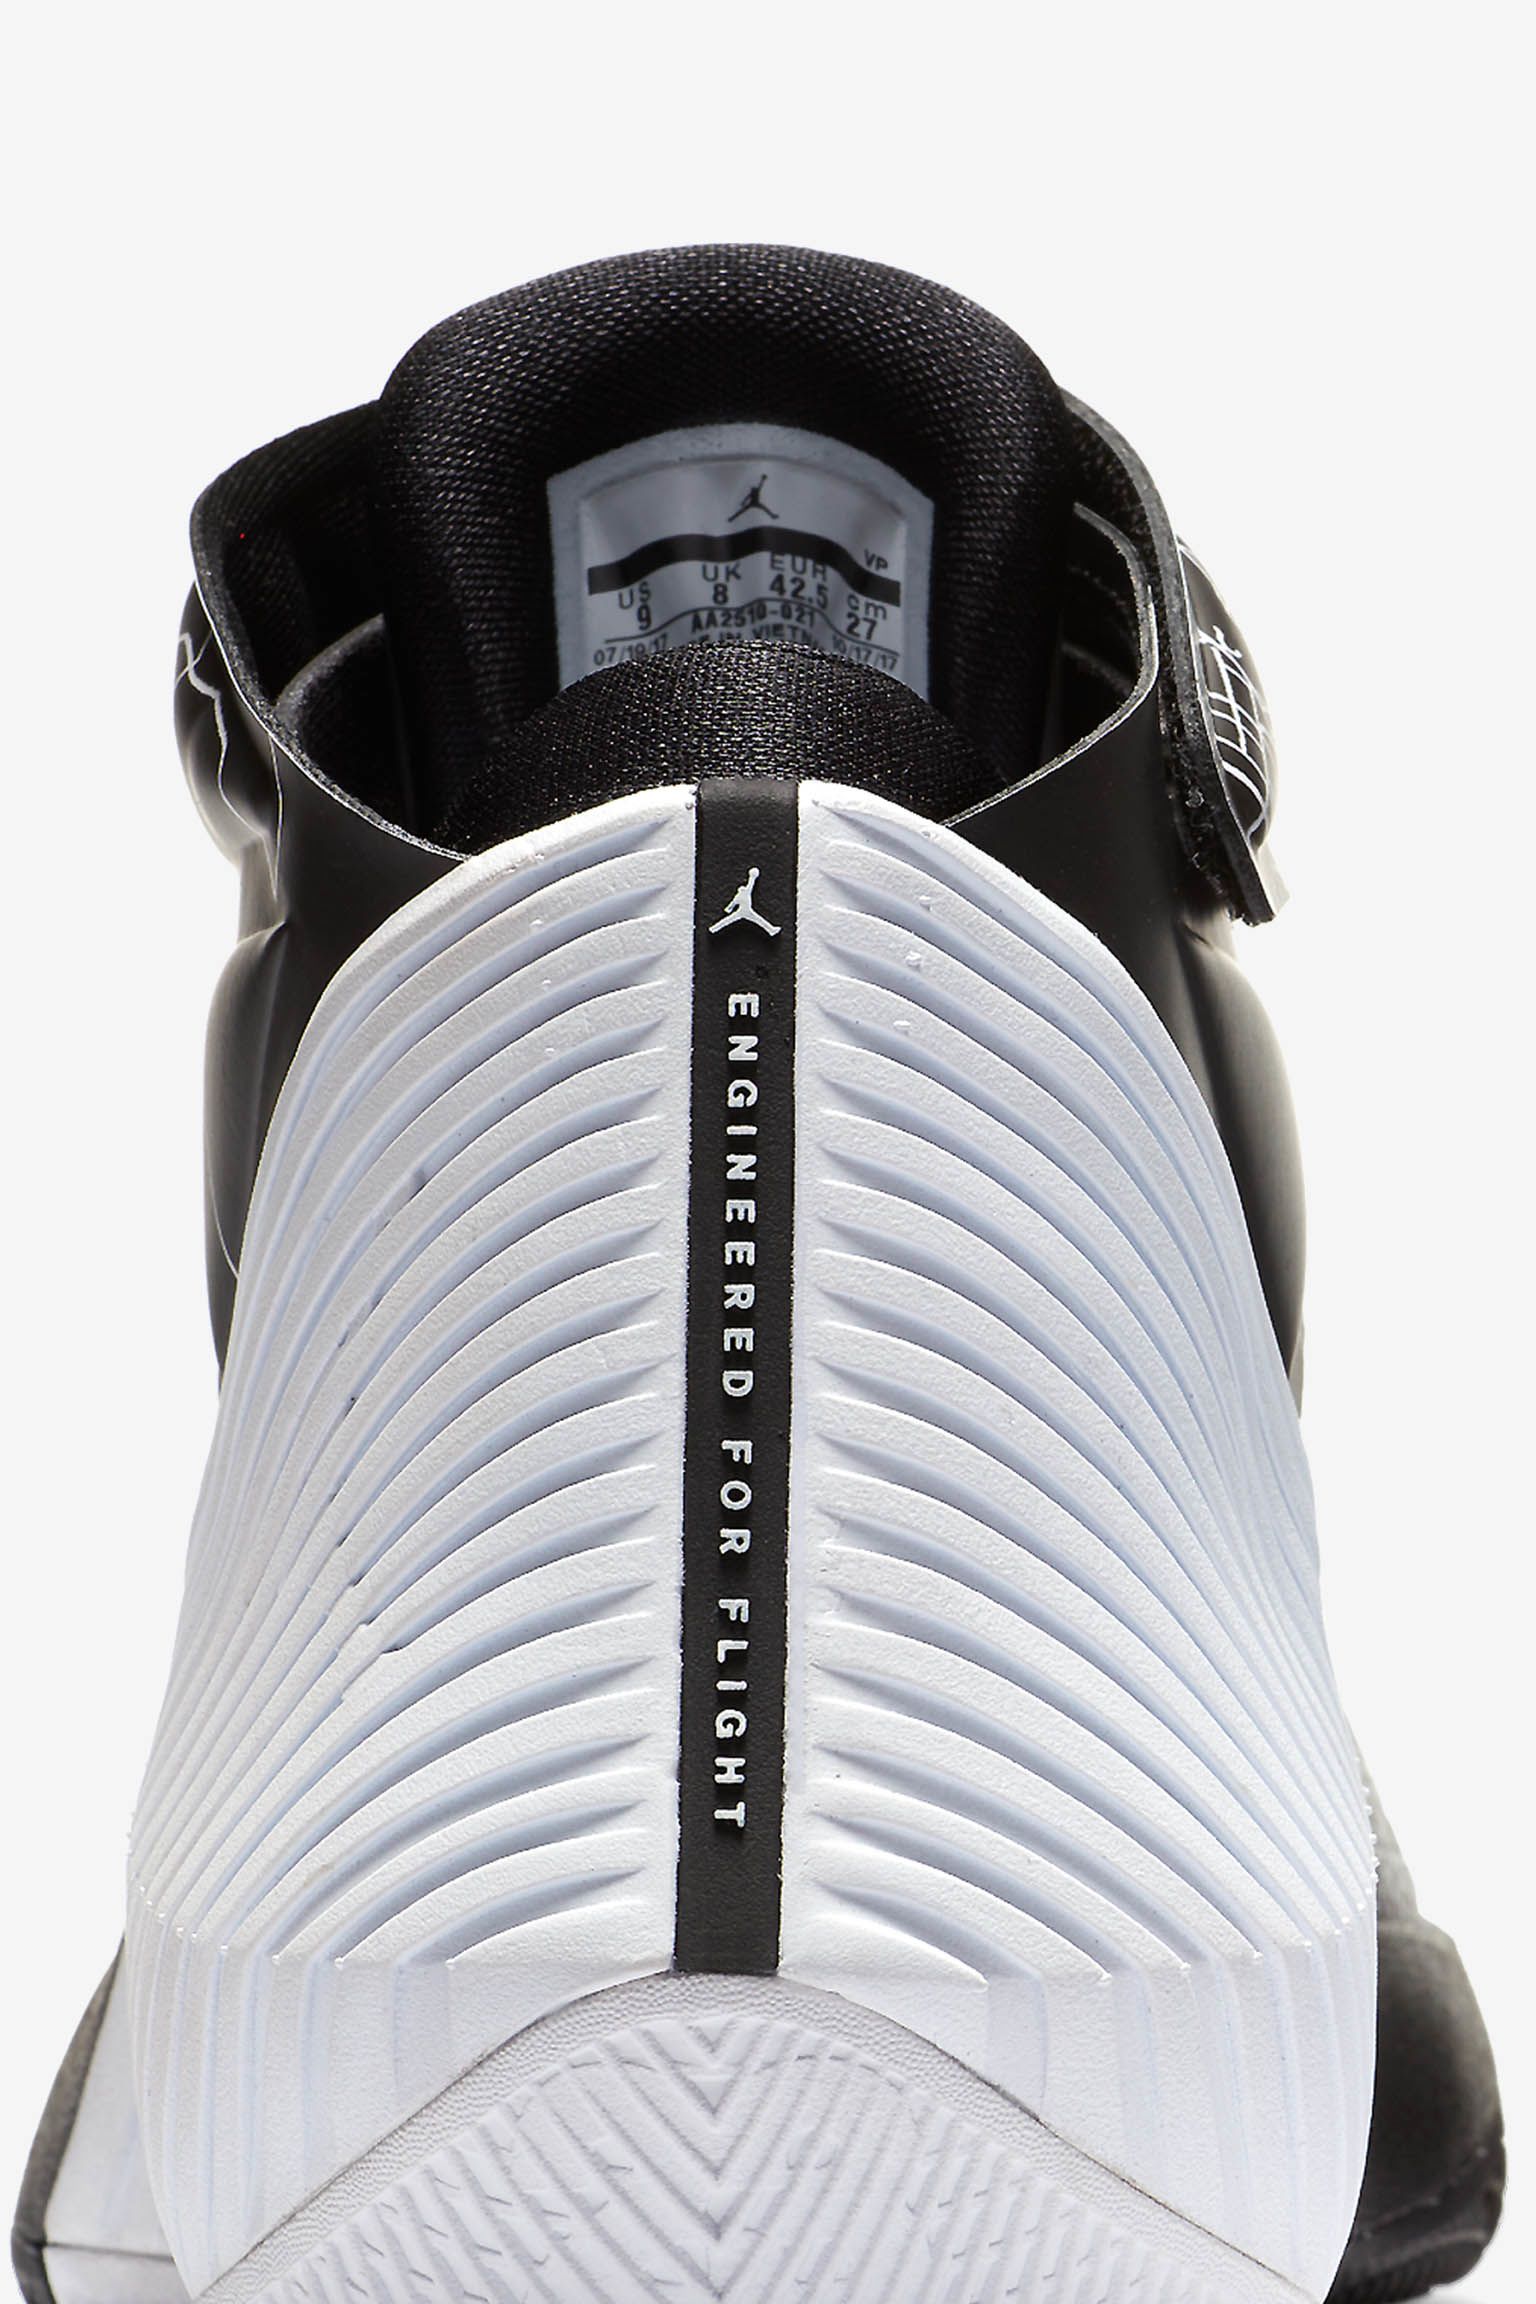 Air Jordan Why Not Zer0.1 'City of Flight' Release Date. Nike SNKRS